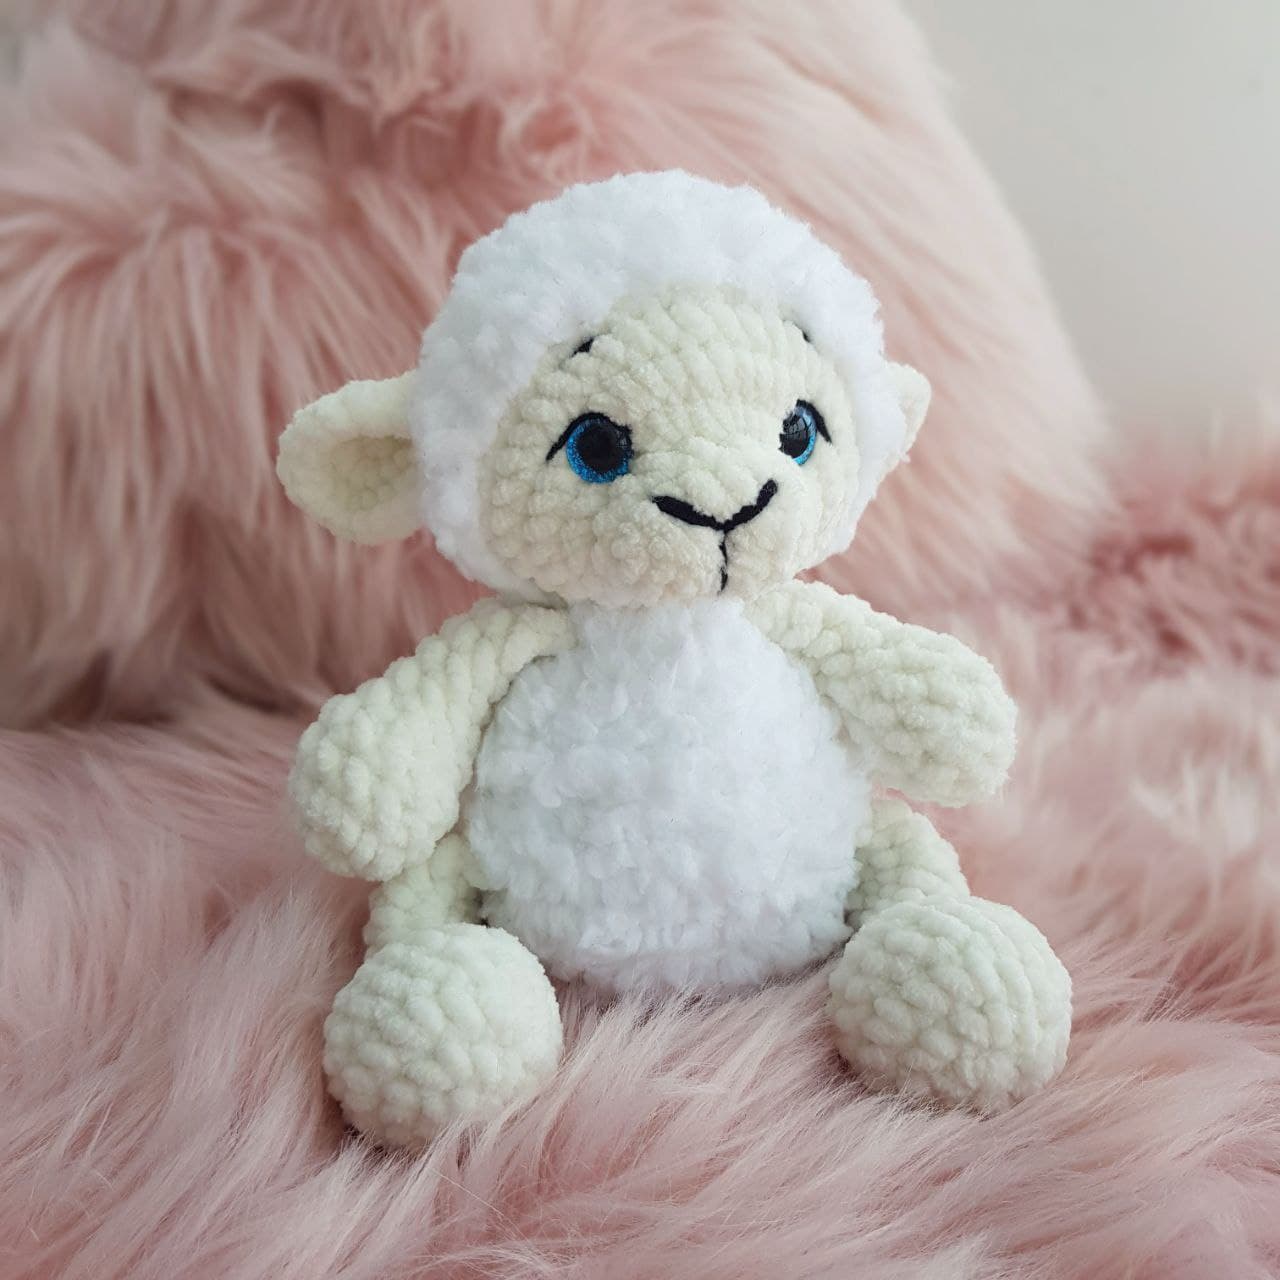 The cutest fluffy AMIGURUMI SHEEP in plush wool 🐑 PART 1 